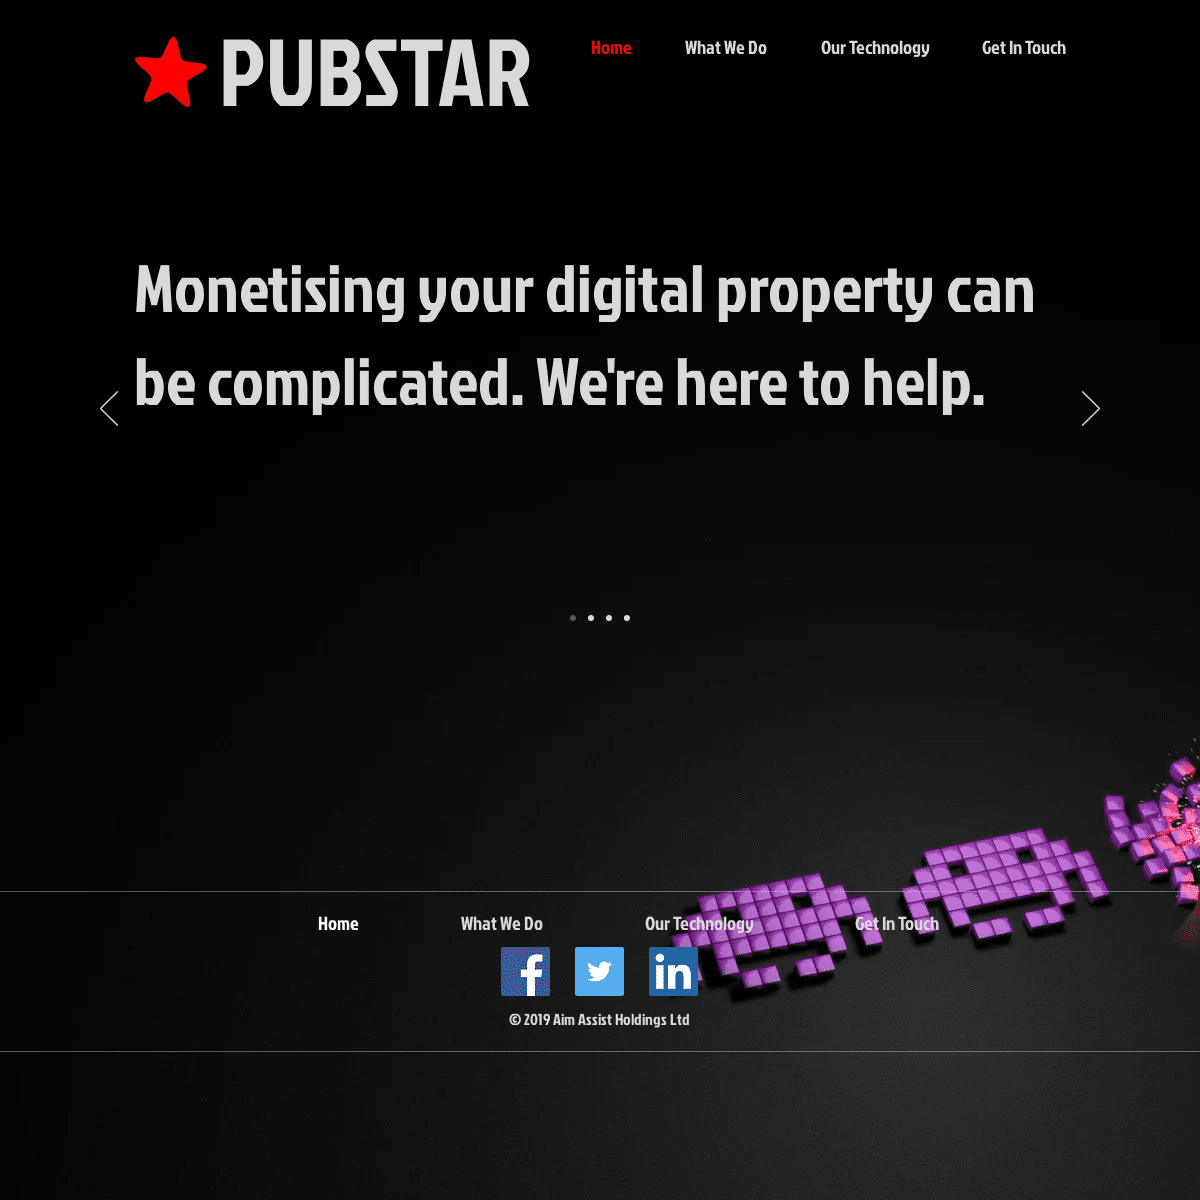 A complete backup of pubstar.co.uk